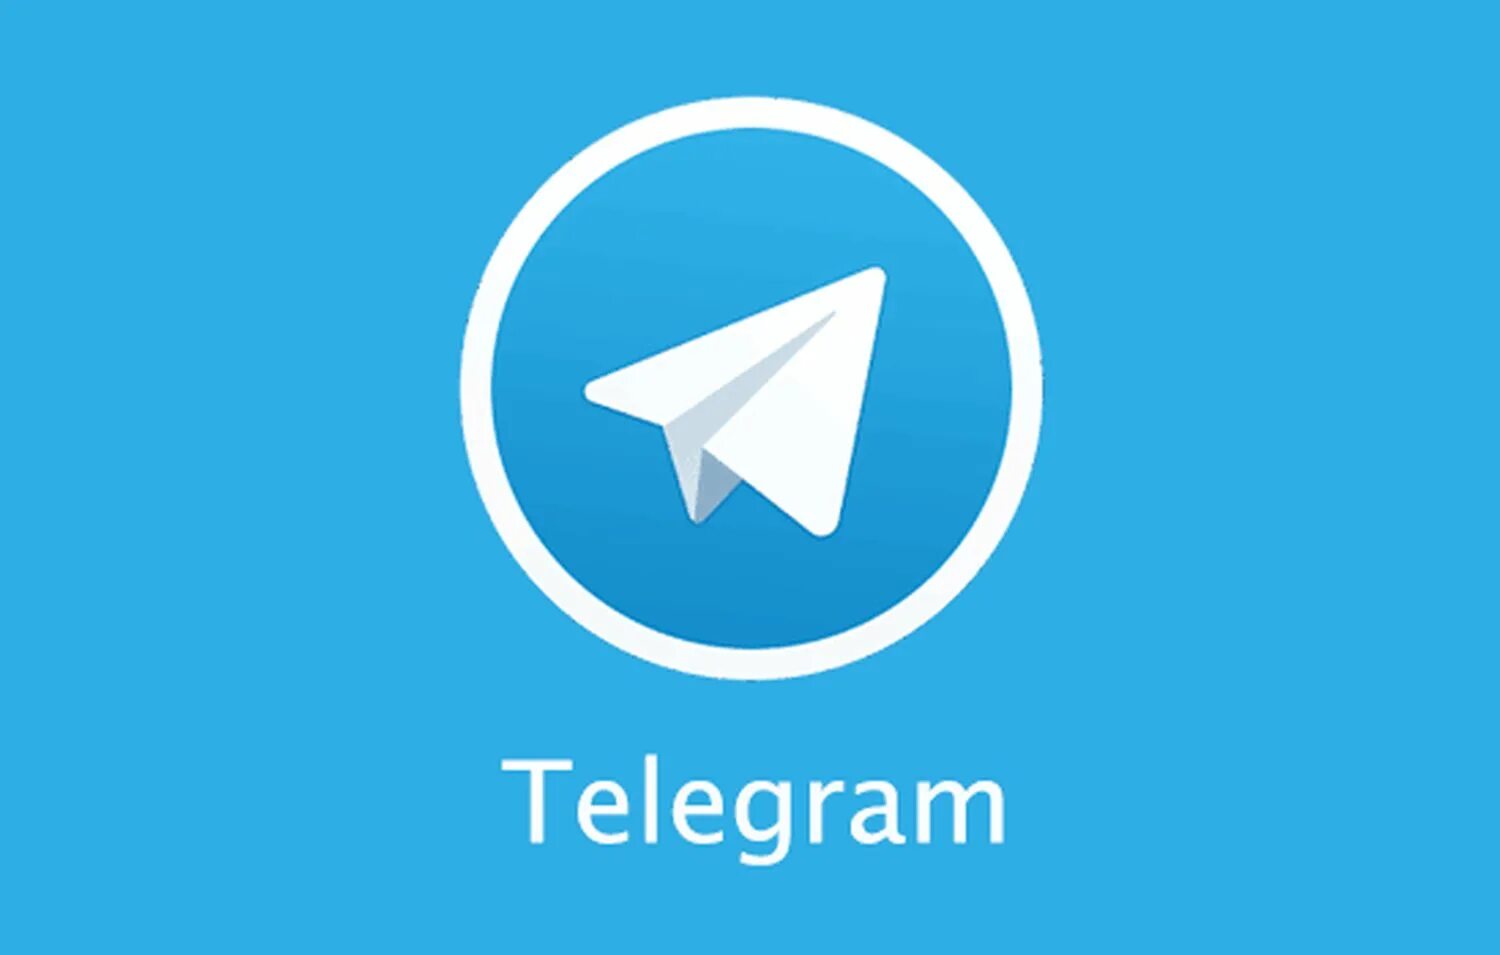 Телеграмм. Телега логотип. Логотип телеграм. Изображение телеграмм. Турк телеграм